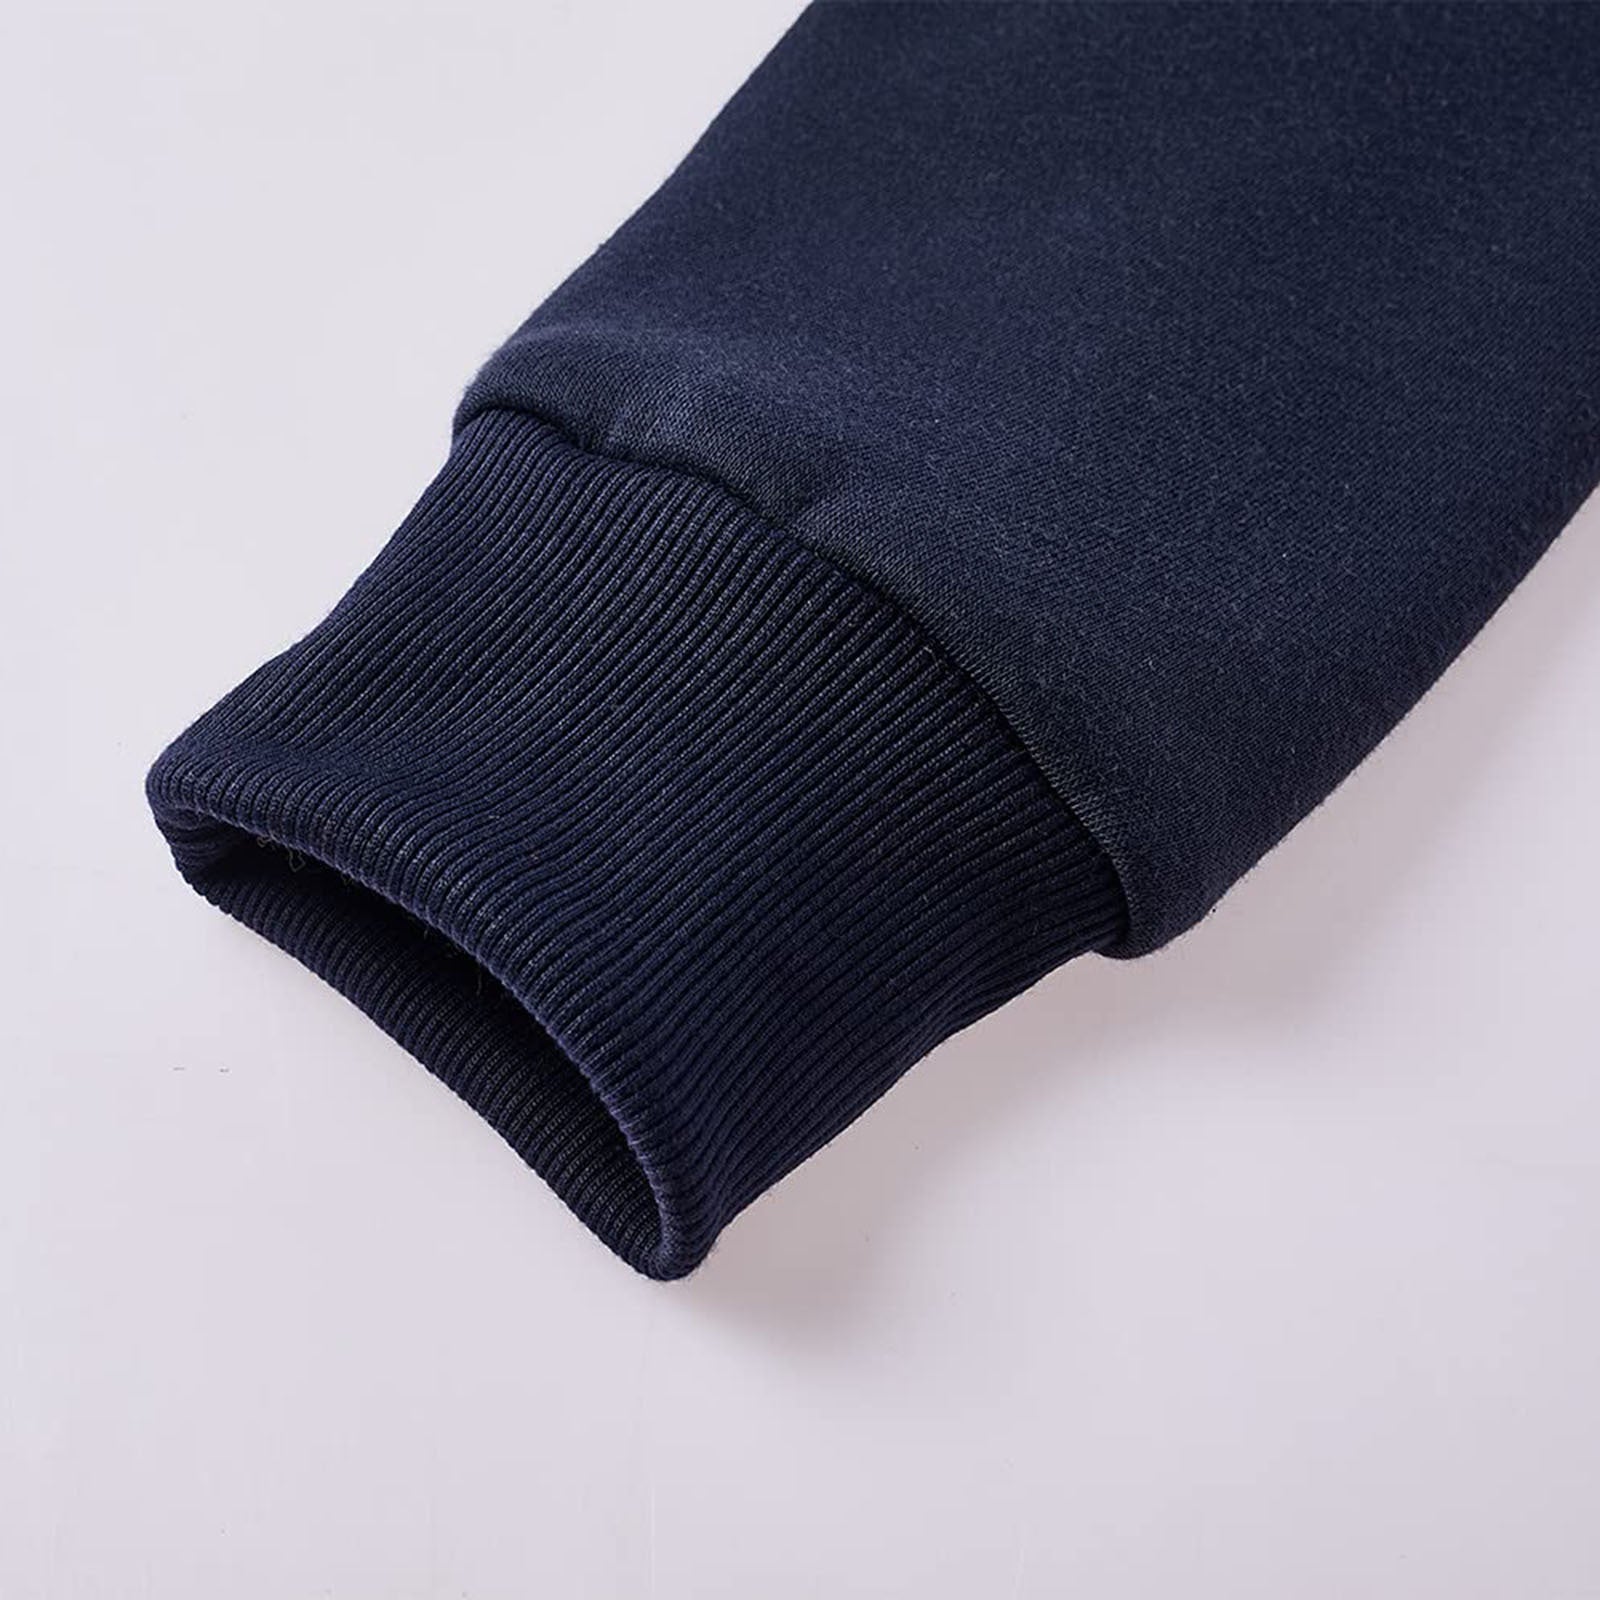 Casual Men's Zipper Hoodies-Coats & Jackets-Khaki-M-Free Shipping Leatheretro